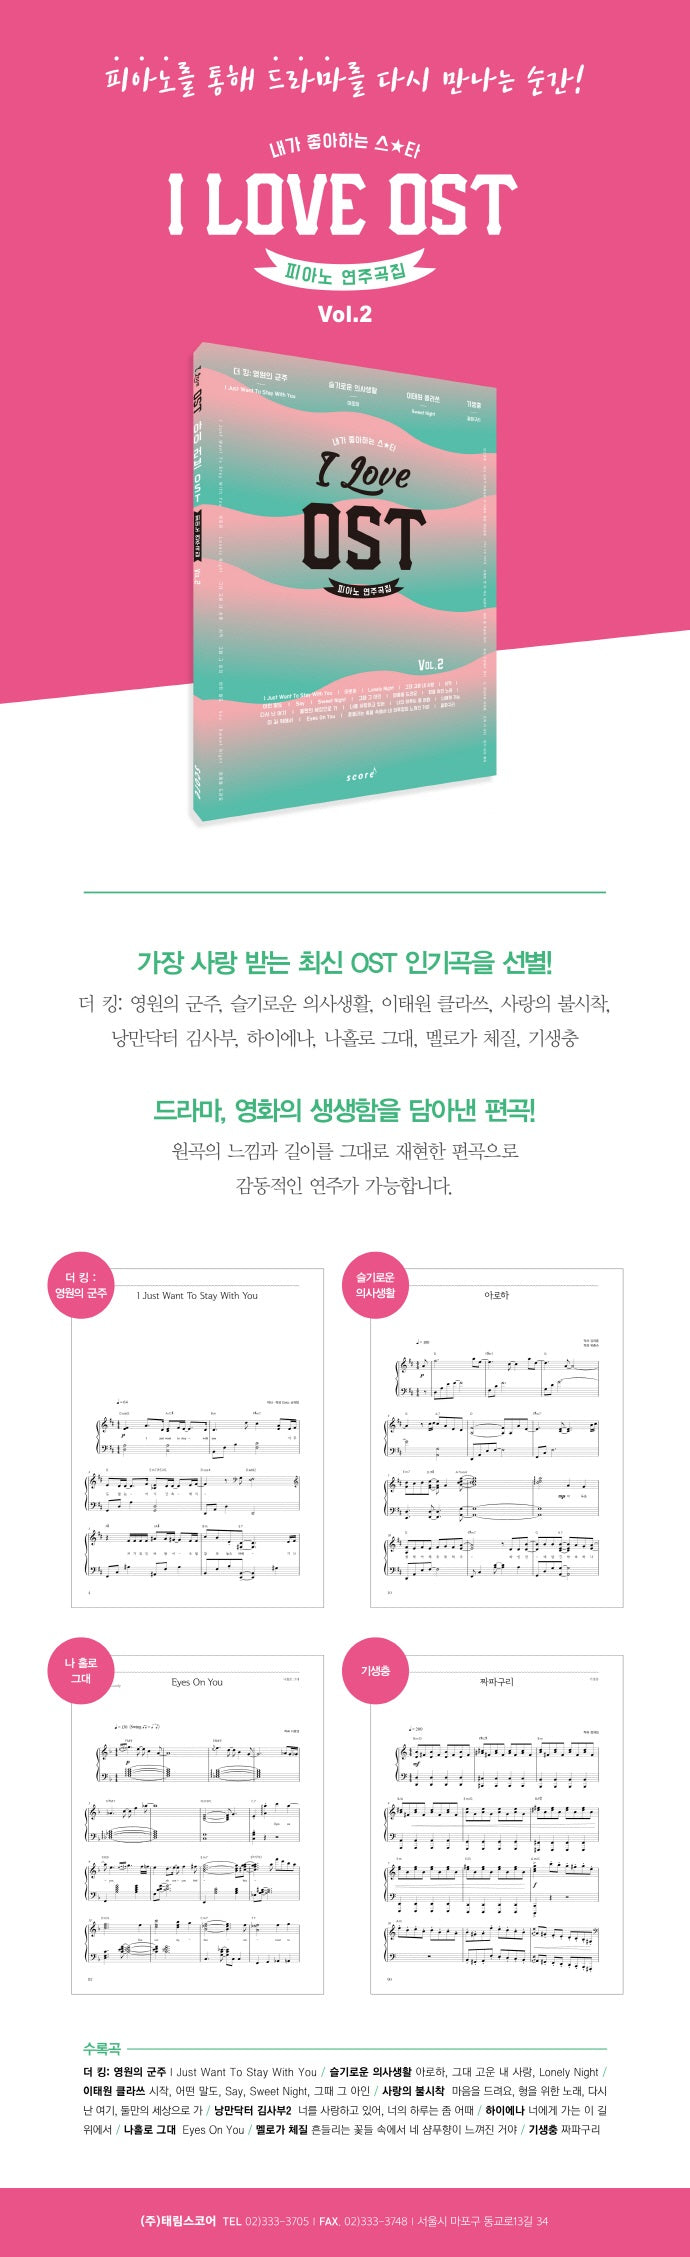 I Love OST Piano Scorebook Vol. 2